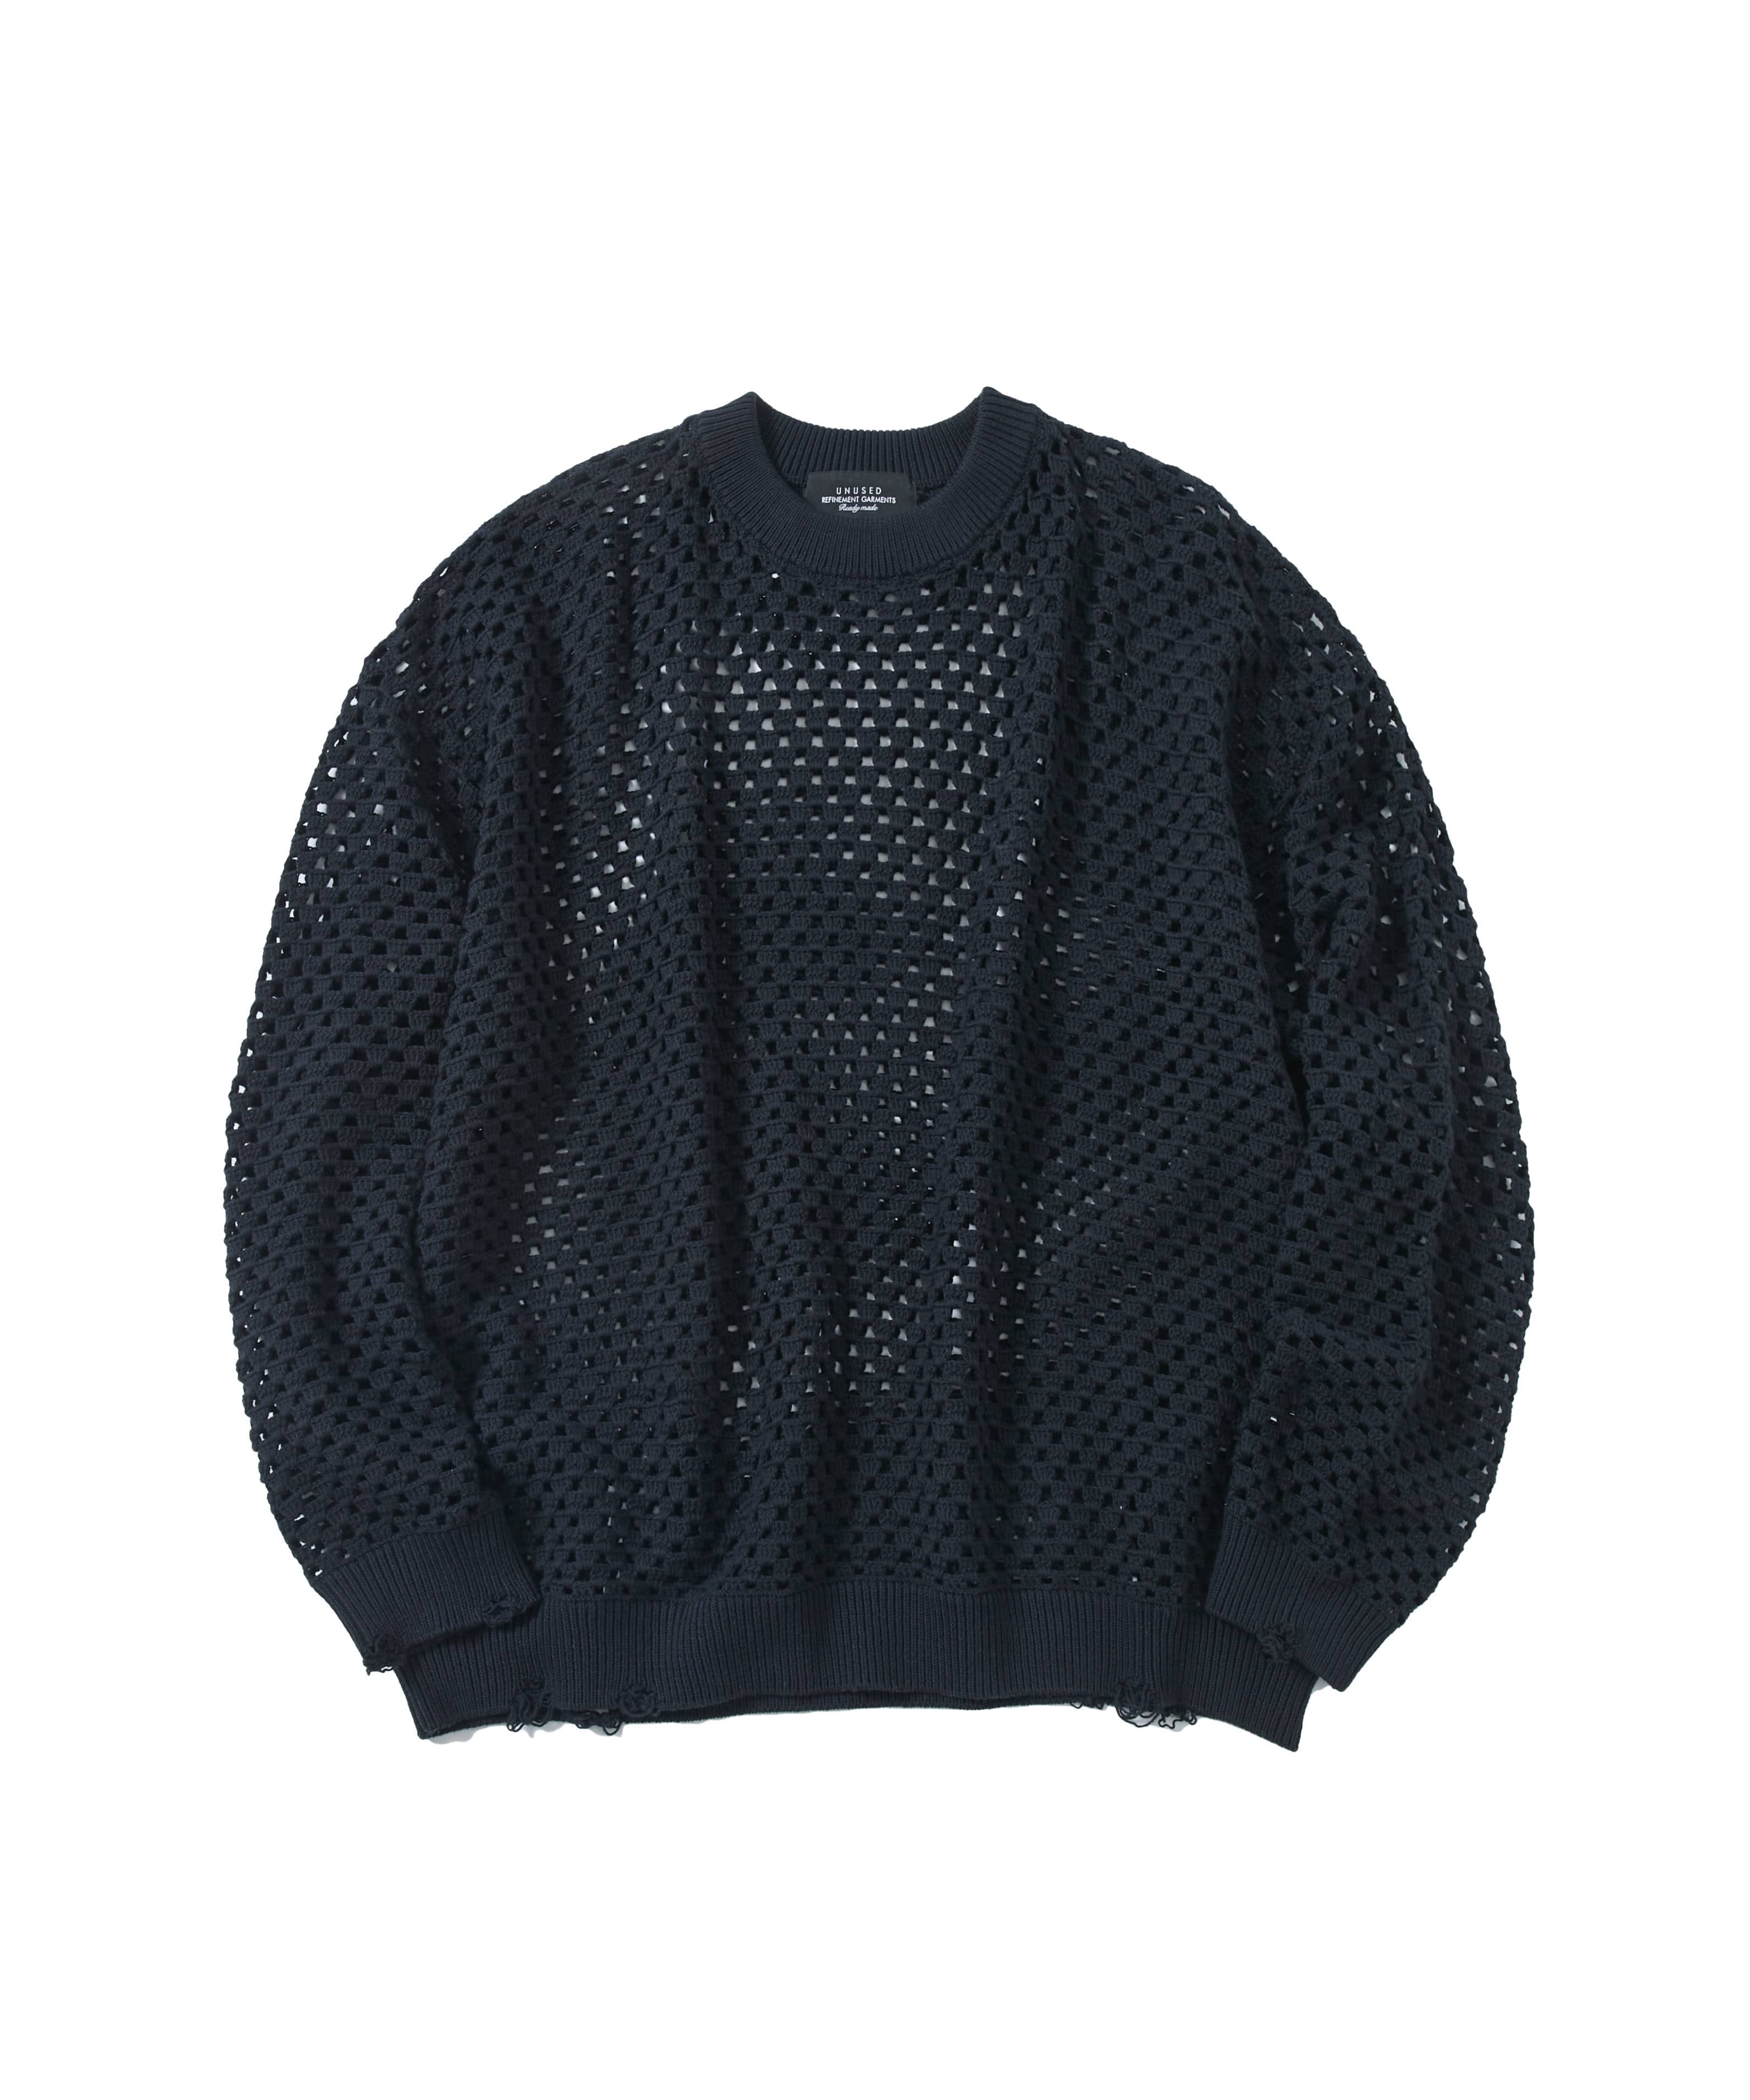 Crochet crewneck sweater